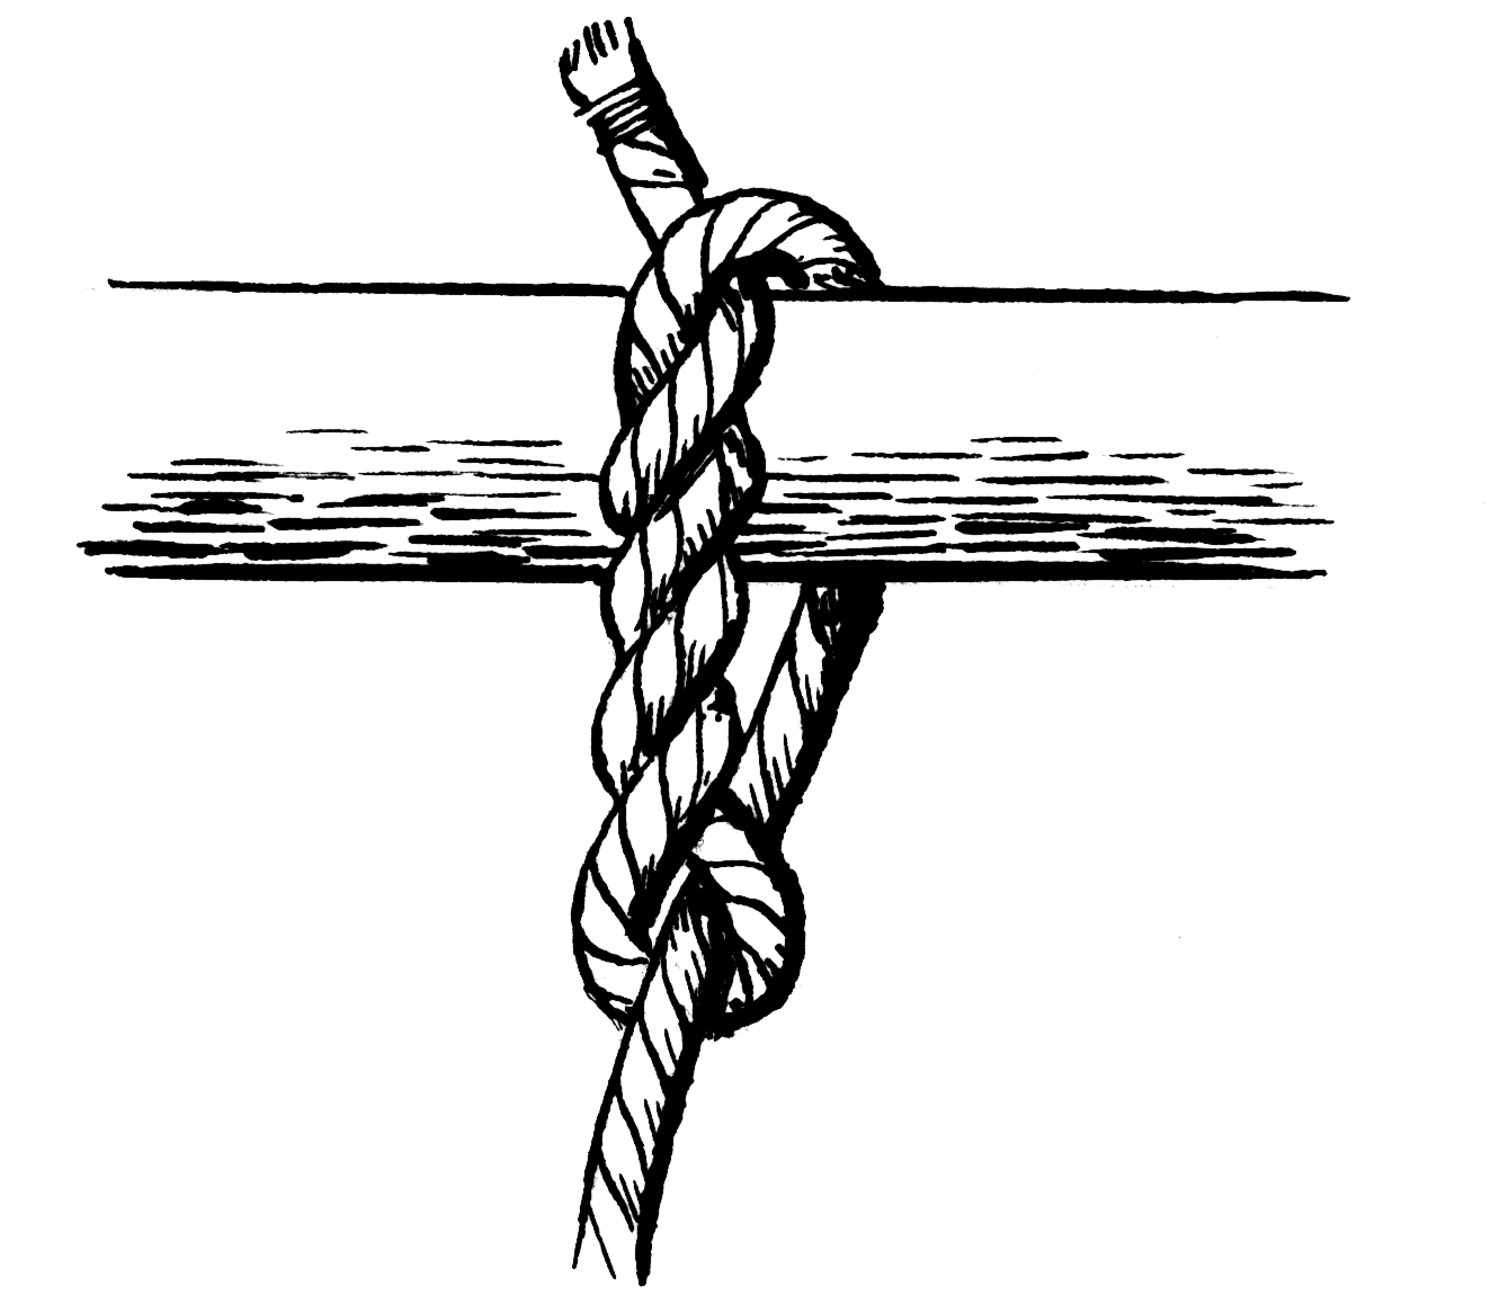 Nylon rope trick - Wikipedia